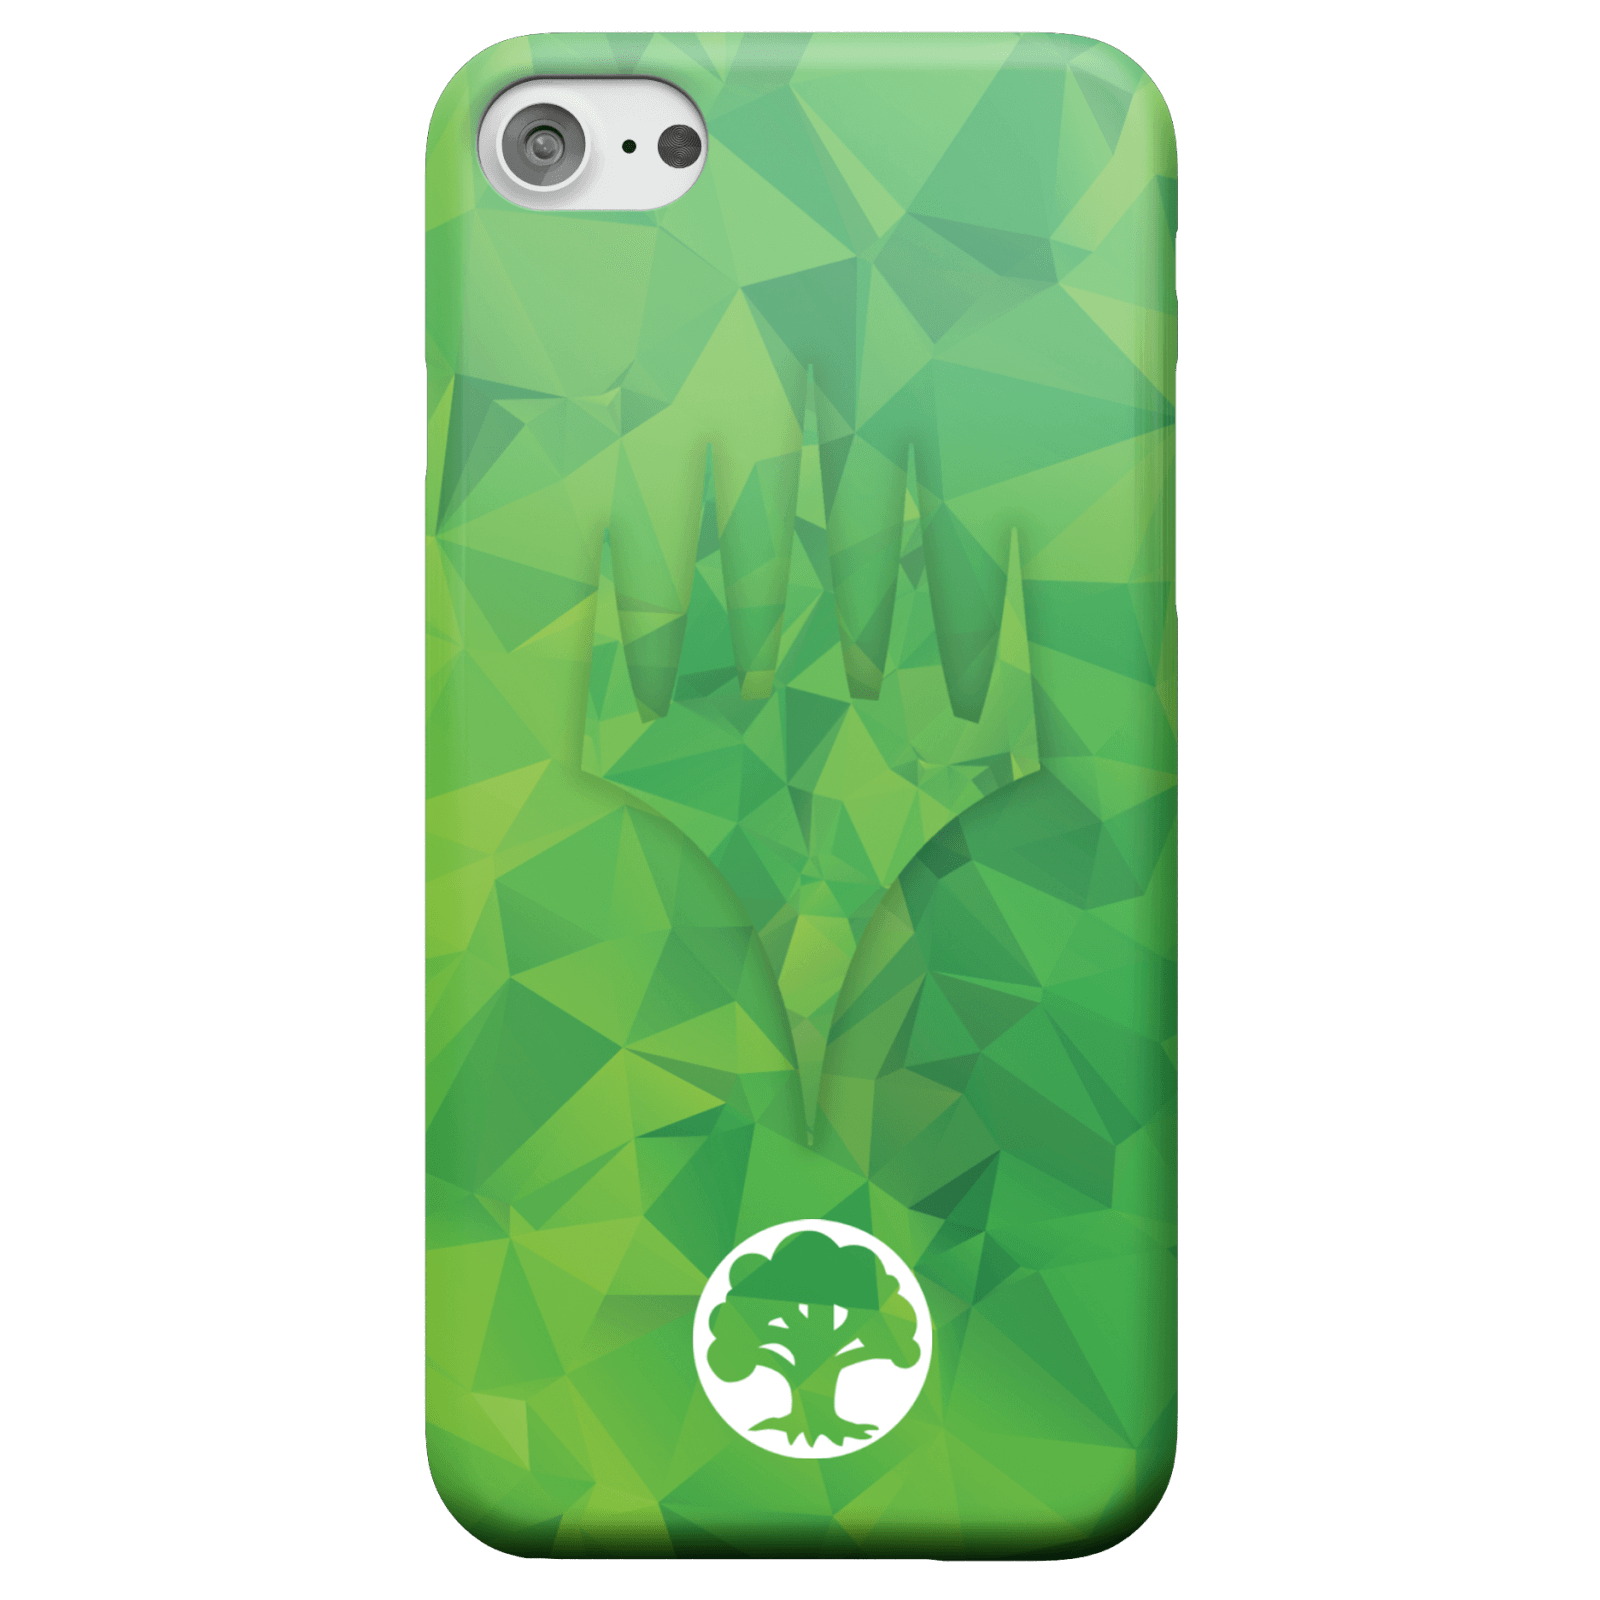 Funda Móvil Magic The Gathering Maná Verde para iPhone y Android - iPhone 6S - Carcasa doble capa - Brillante